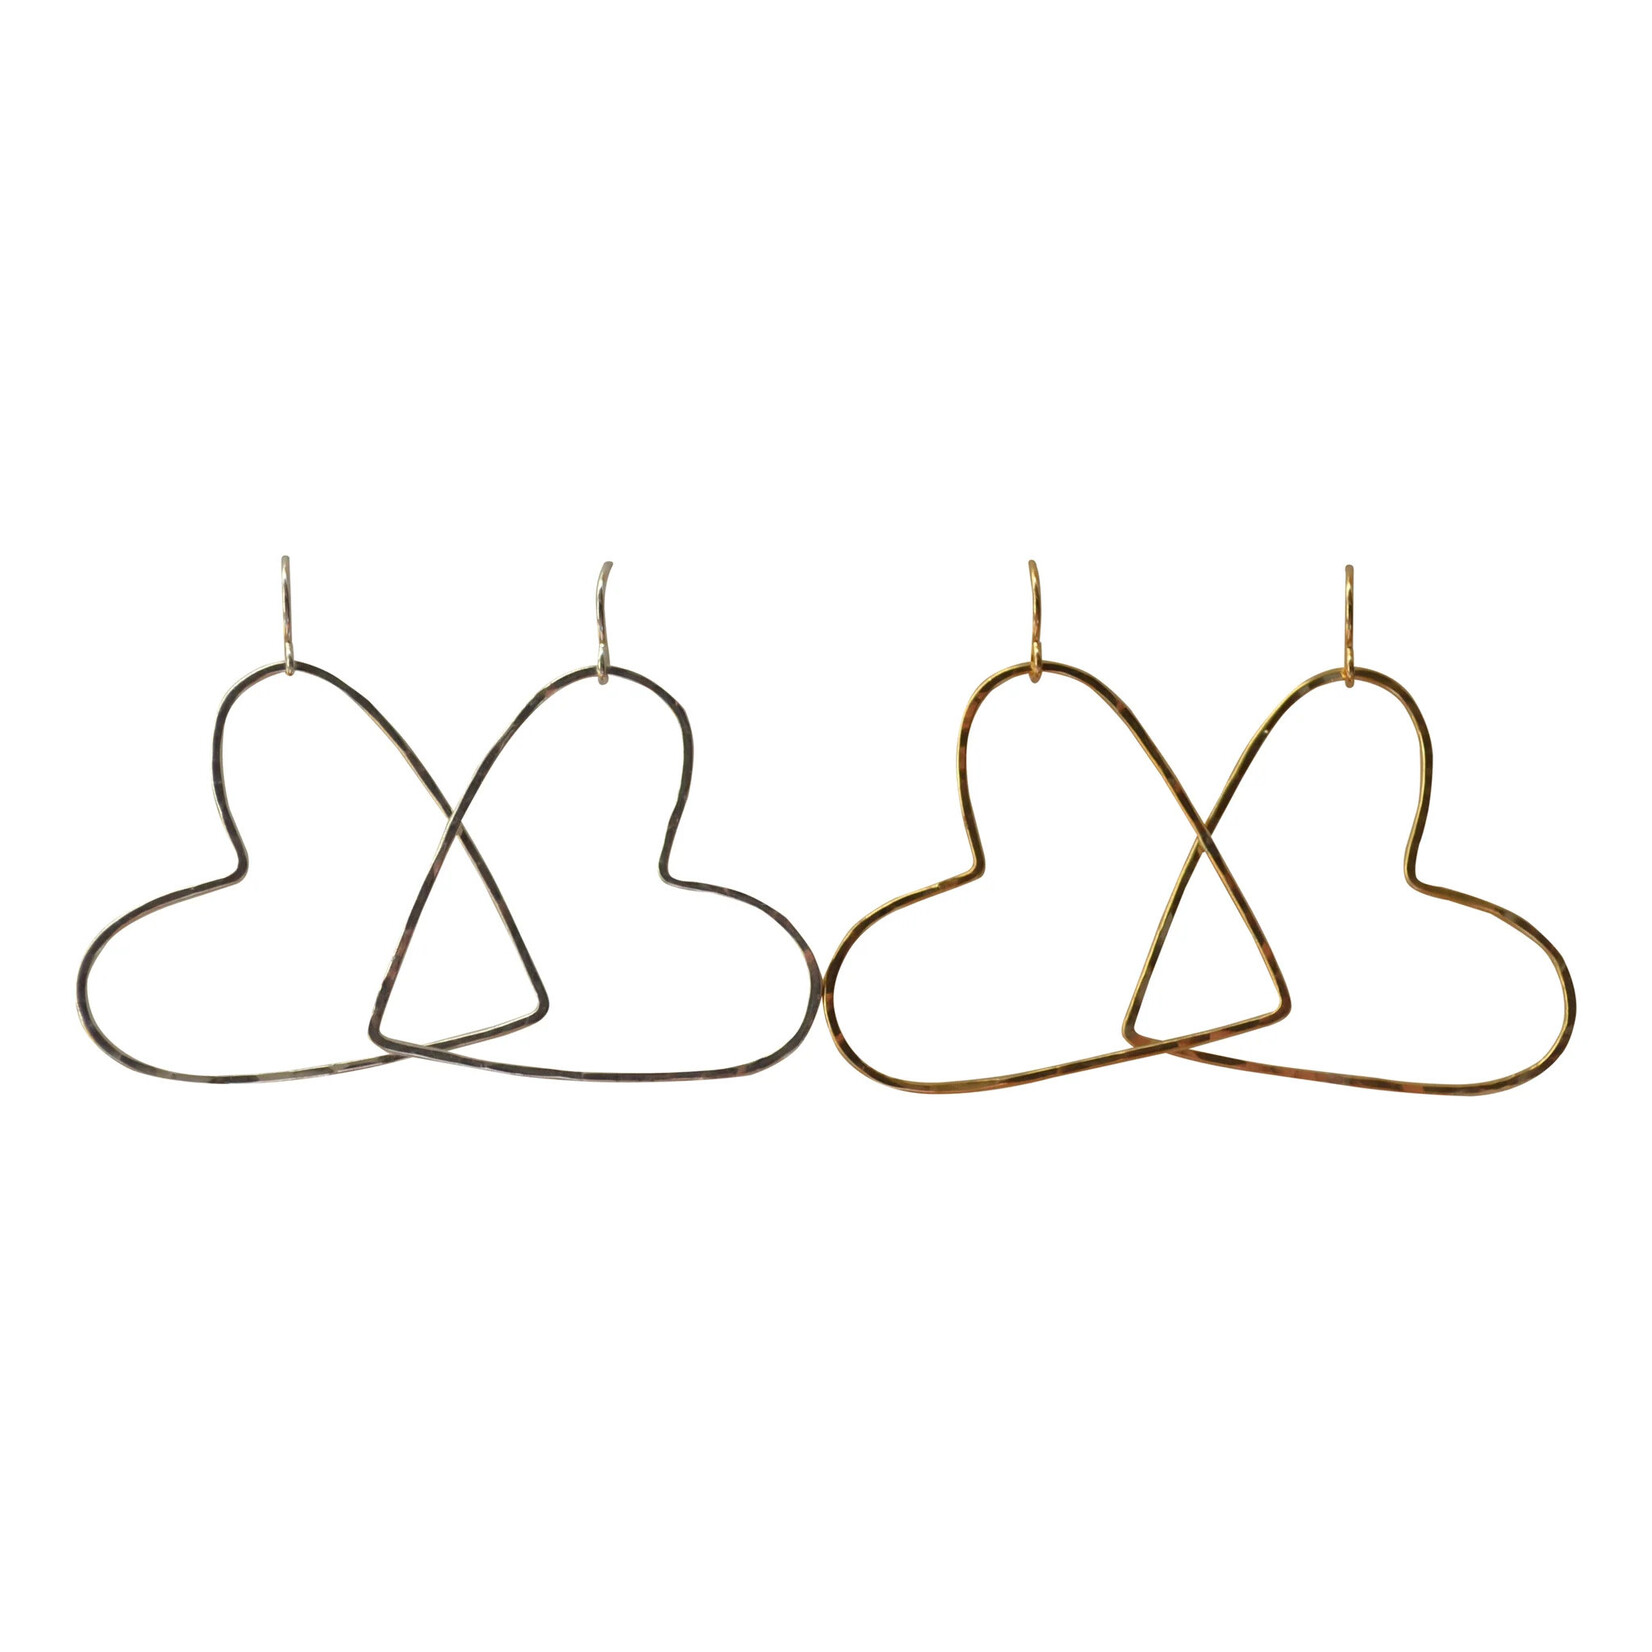 Tamacino "Dahlia" - large single shape earrings